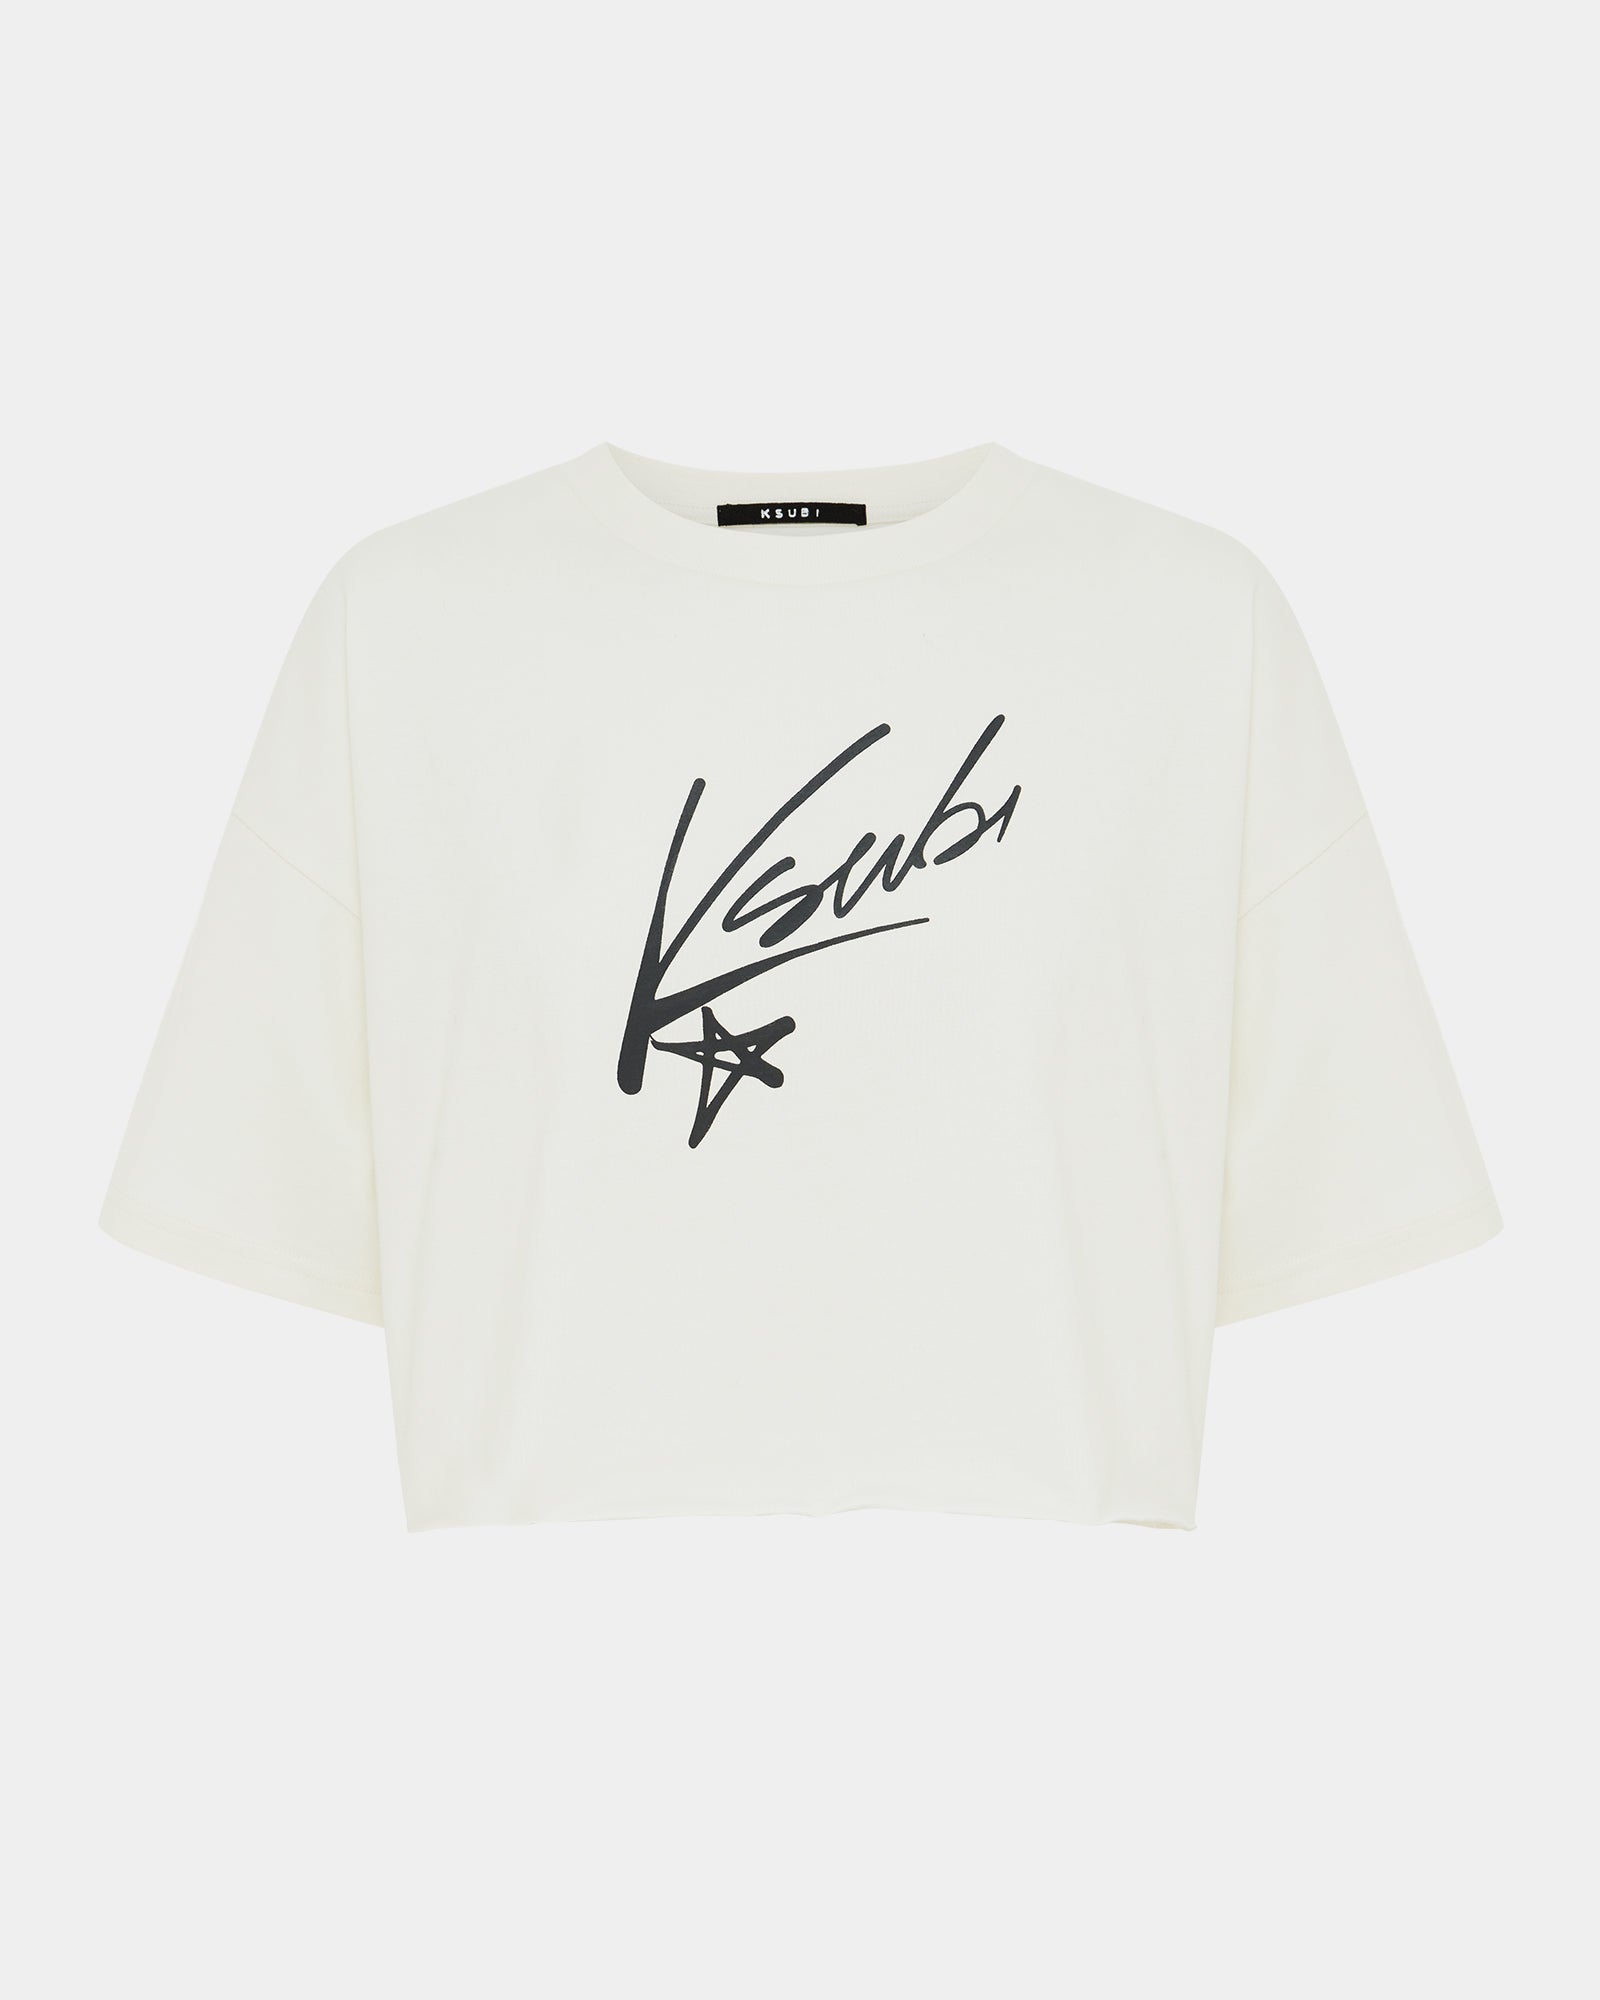 Buy Sprayed Oh G Crop Ss Tee White | Oversized Shirt | Ksubi | Ksubi